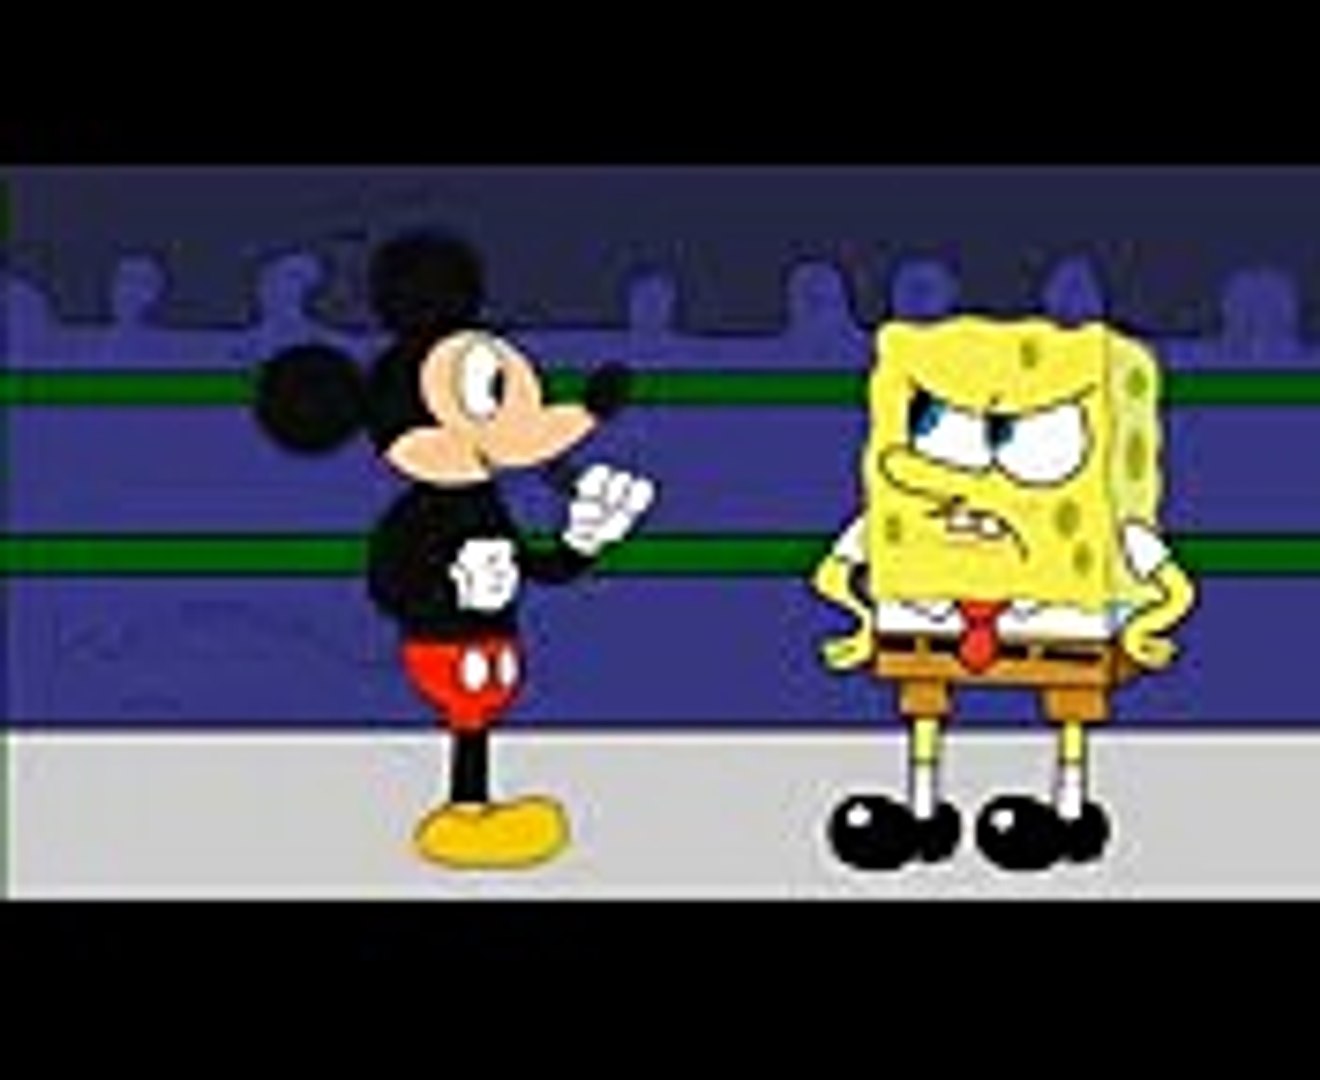 Mickey Mouse Vs Spongebob Squarepants Cartoon Beatbox Battle